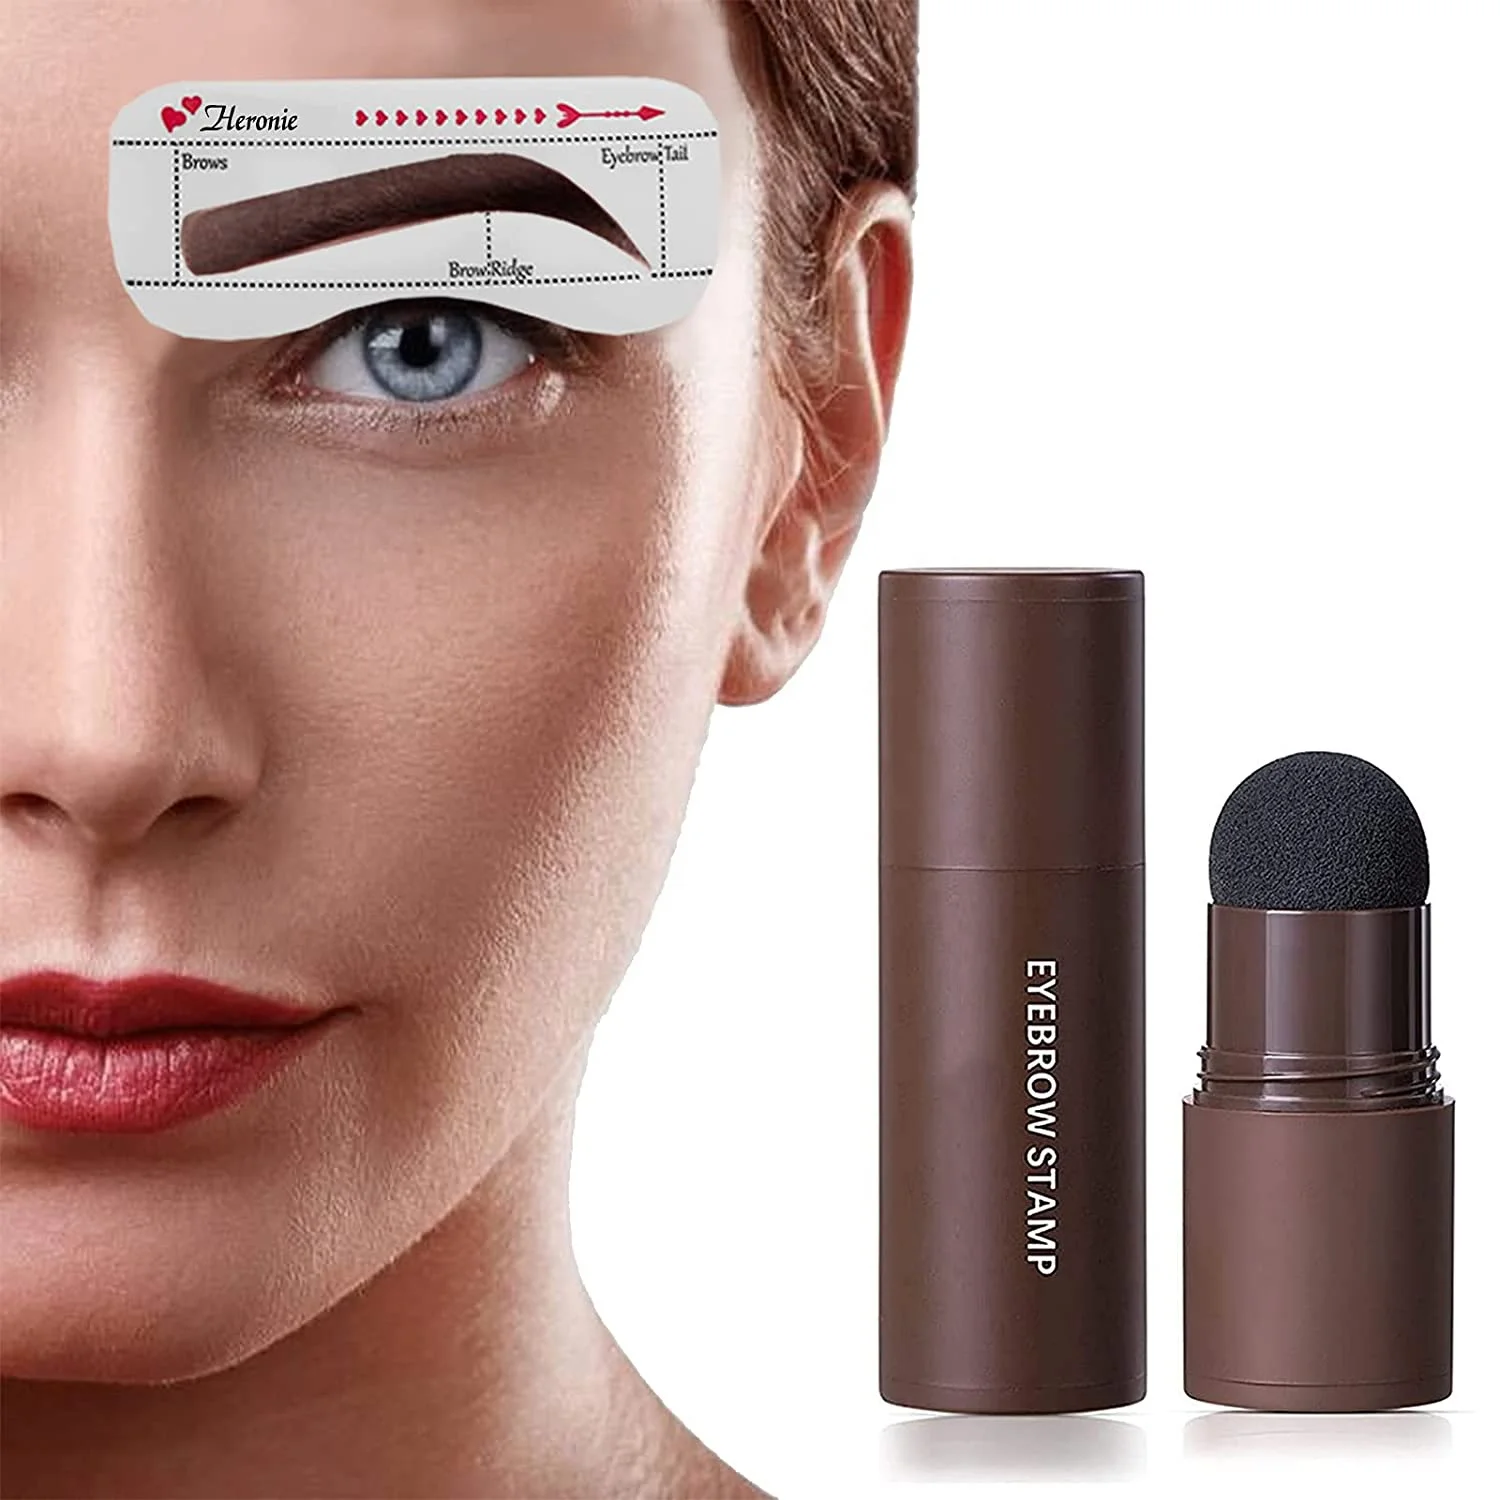 

Waterproof Eyebrow Definer One Step Eyebrow Stamp Women's Makeup Tool Kit With Reusable Eyebrow Stencils